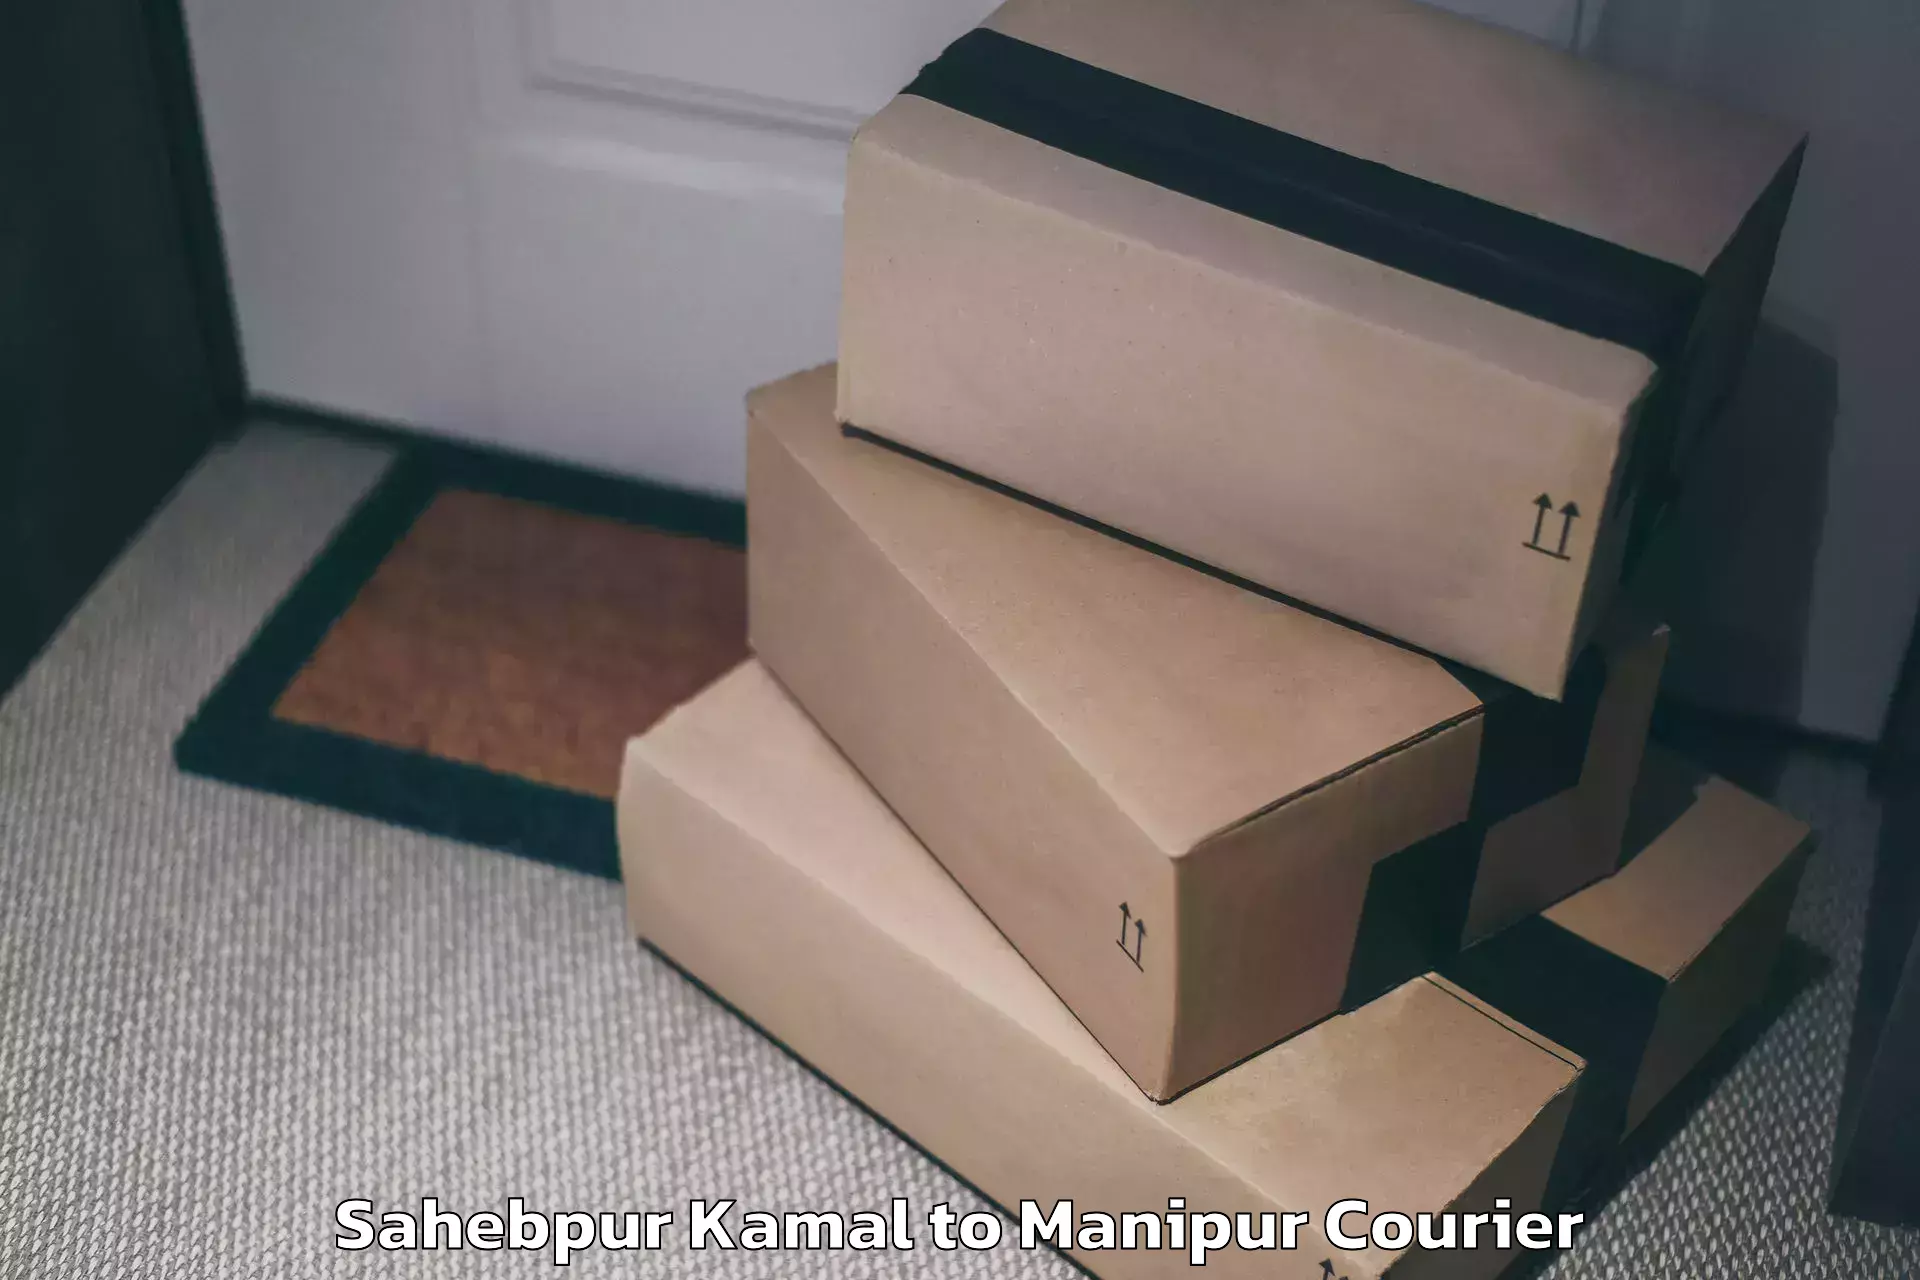 Baggage delivery technology Sahebpur Kamal to Chandel